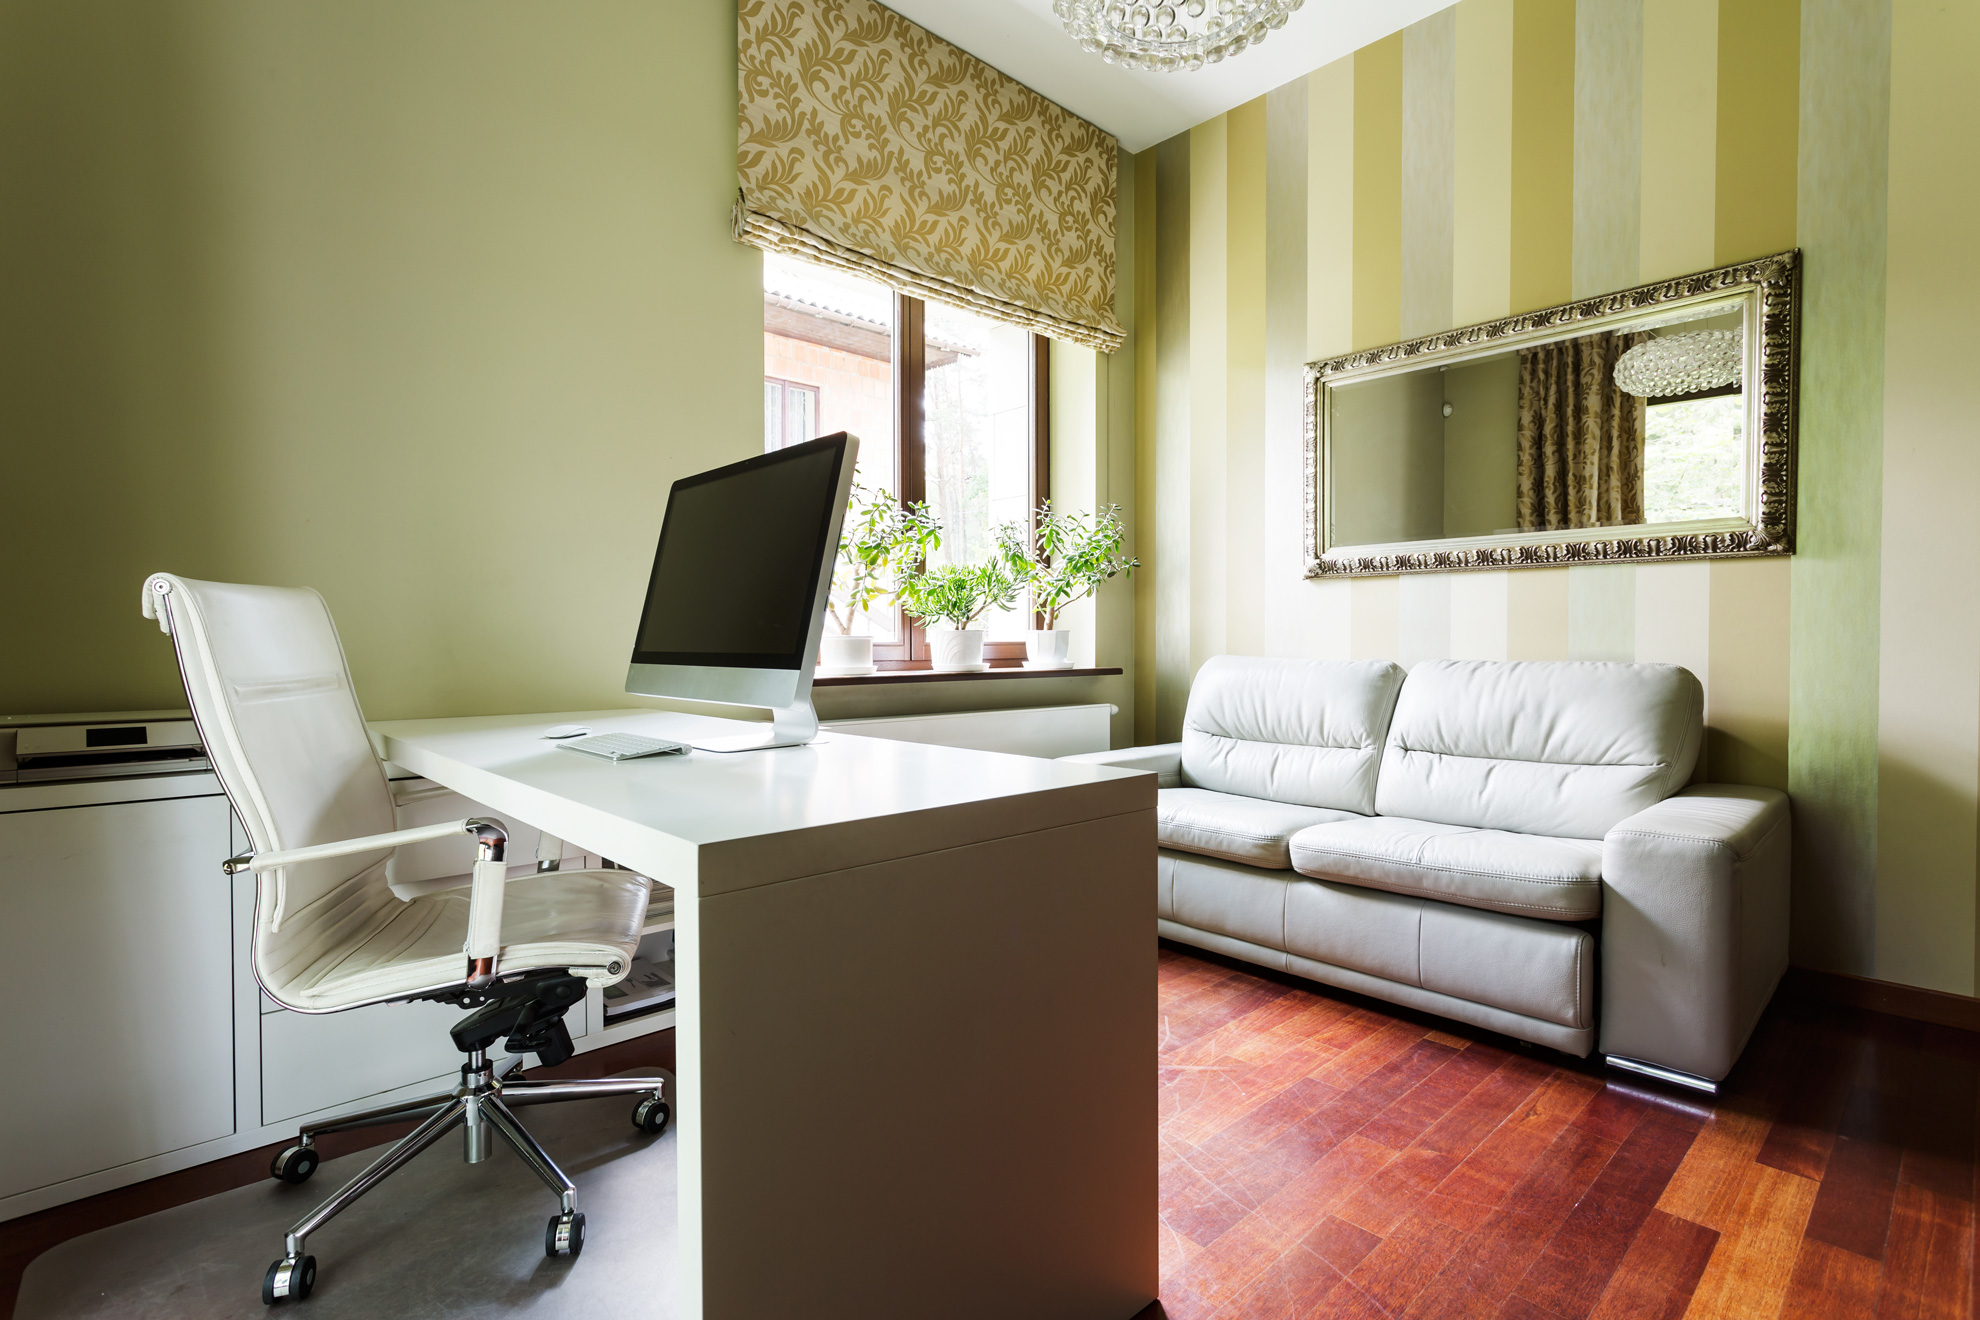 calm-office-in-pastel-colors-PJM8S88-sm.jpg